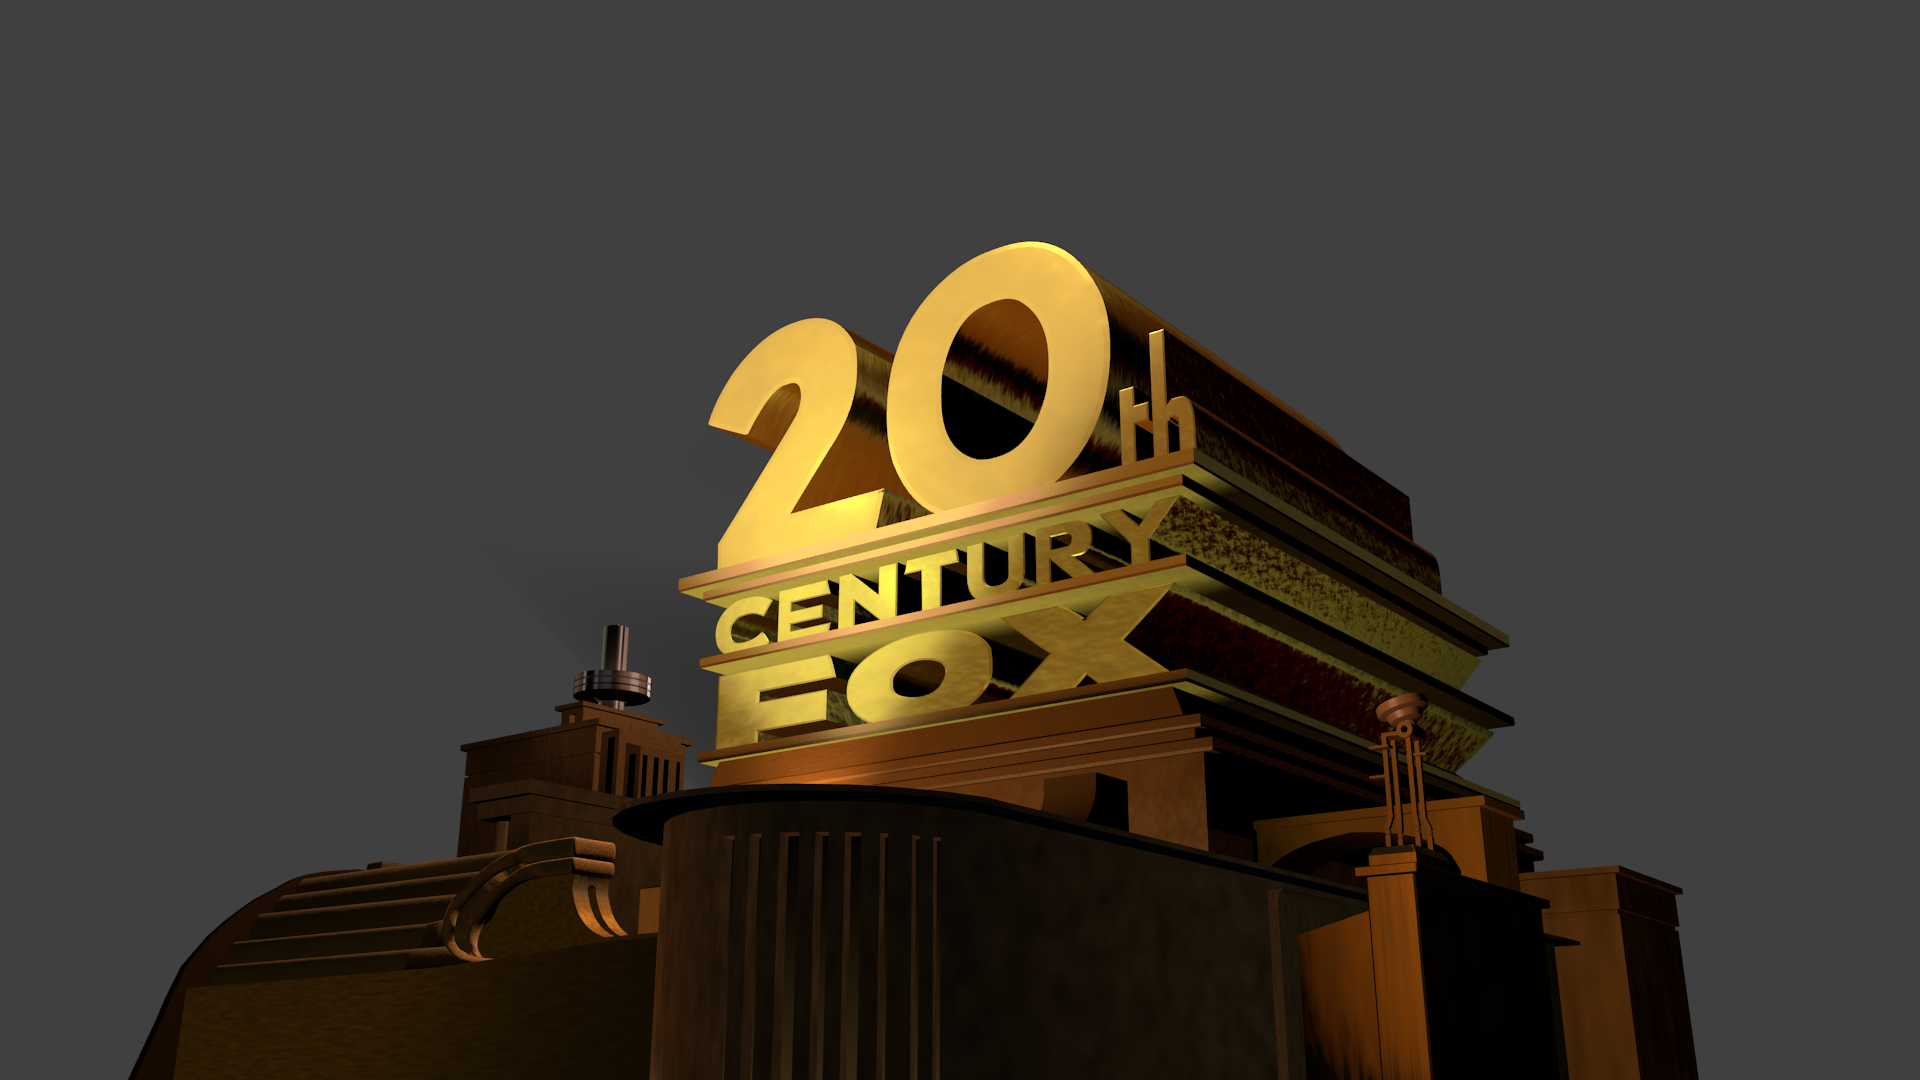 20 th fox. 20 Век Центури Фокс. 20th Century Fox logo. 20 Век Фокс Пикчерз. 20 Студия Фокс.